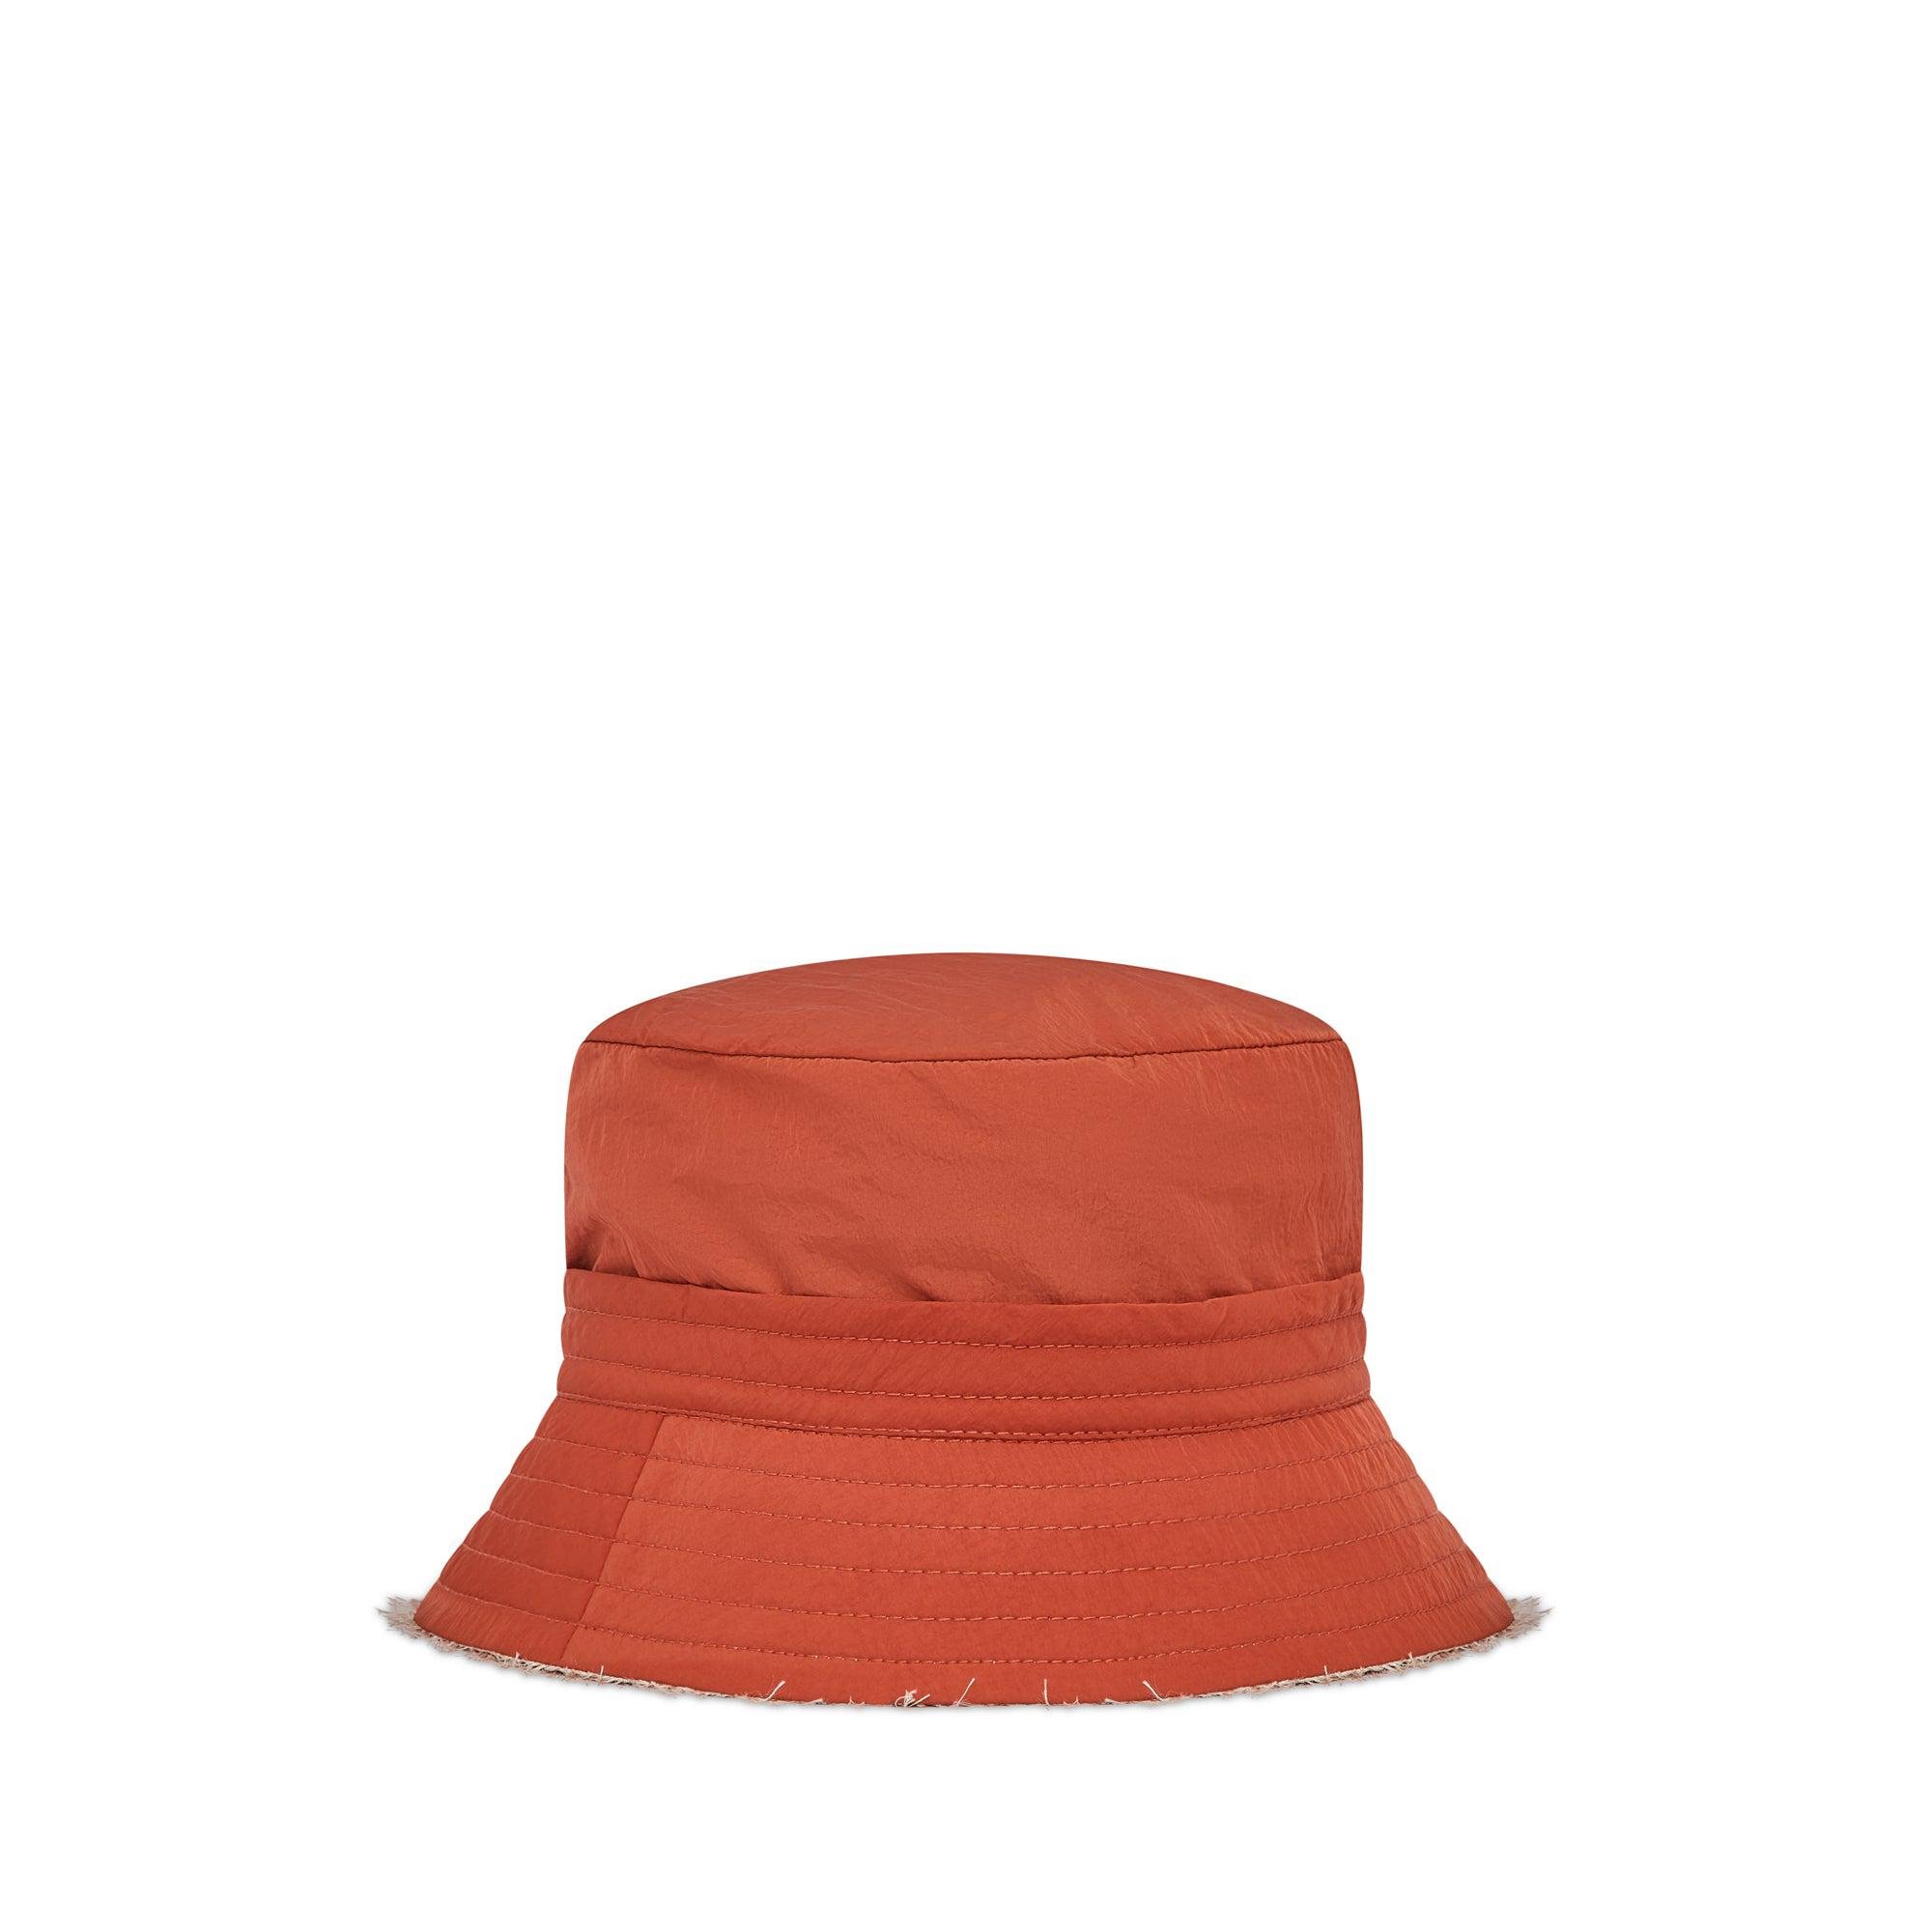 Craig Green Men's - Reversible Bucket Hat - (Red/Pink) by CRAIG GREEN